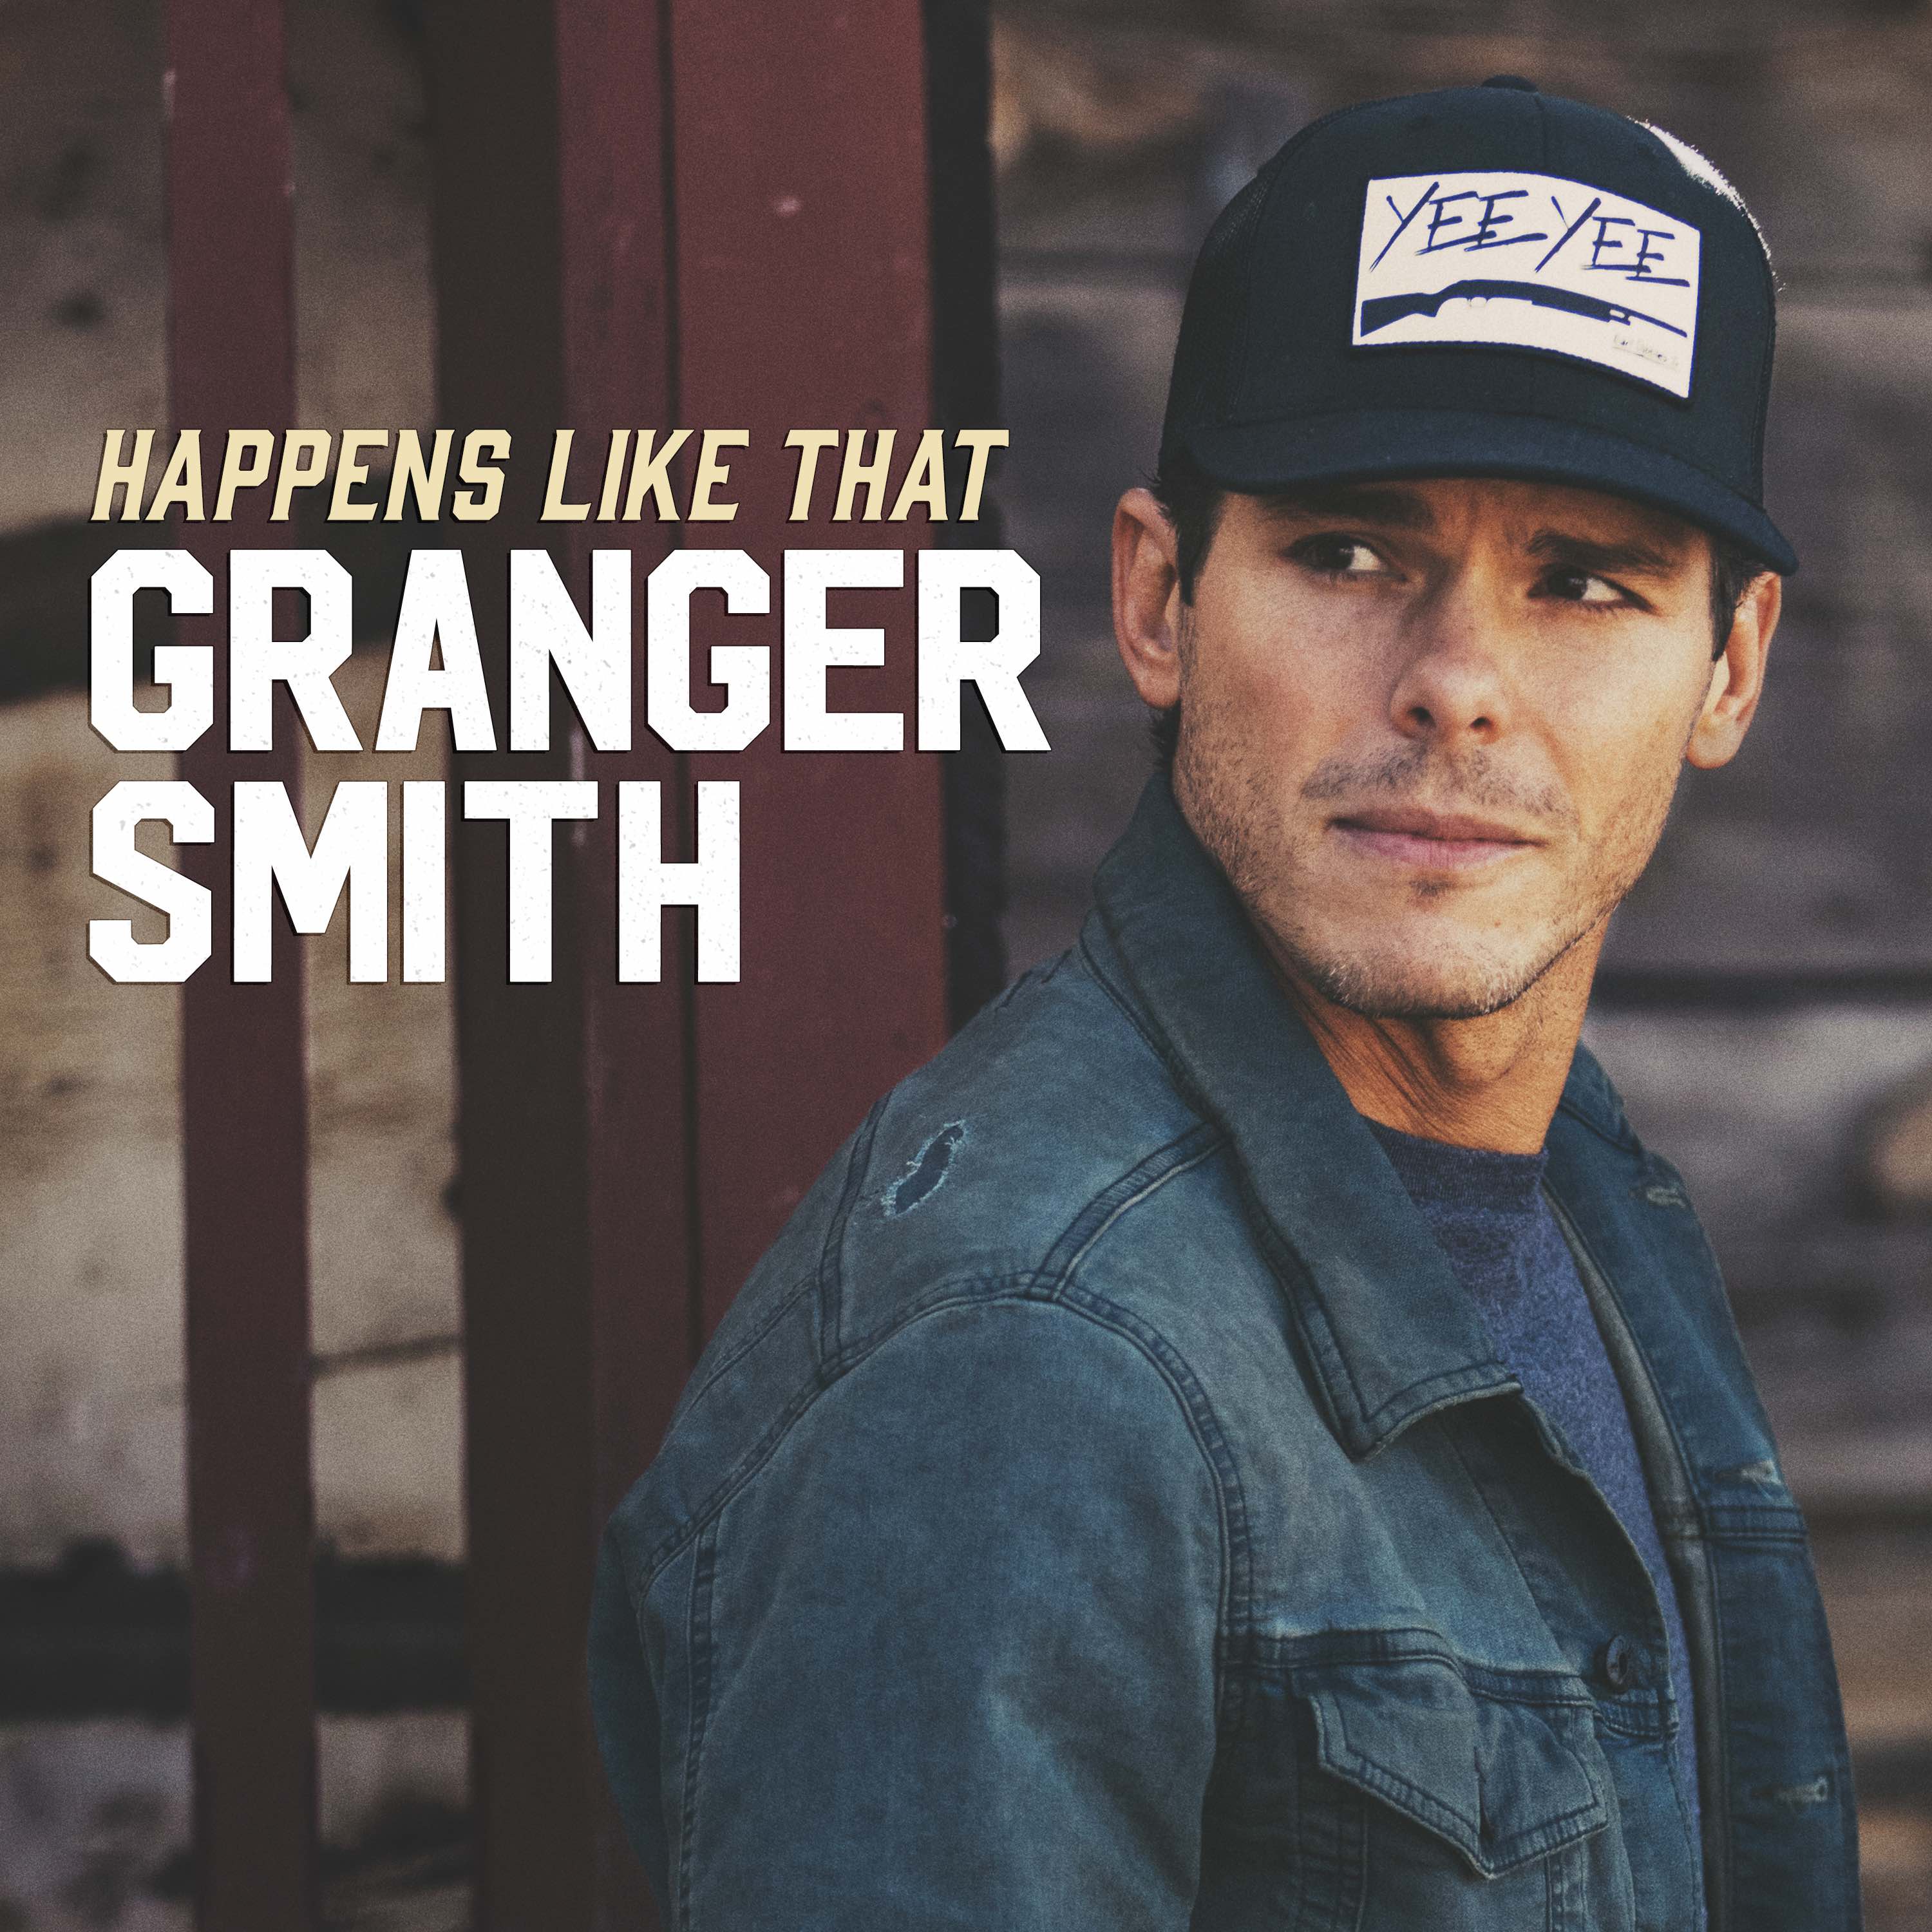 Granger Smith Reveals Details on New Single “Happens Like That”